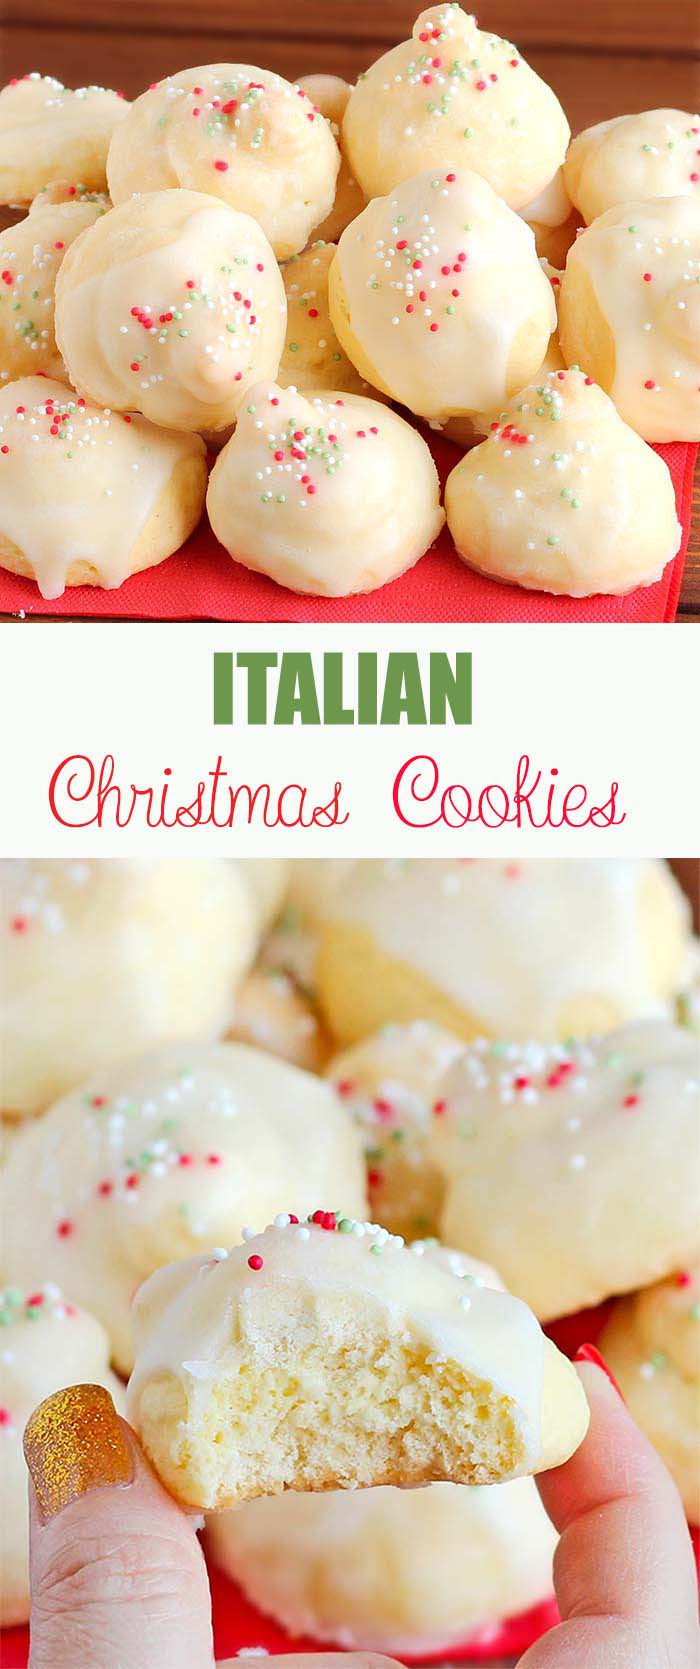 Italian Cookies Recipes
 Italian Christmas Cookies Cakescottage